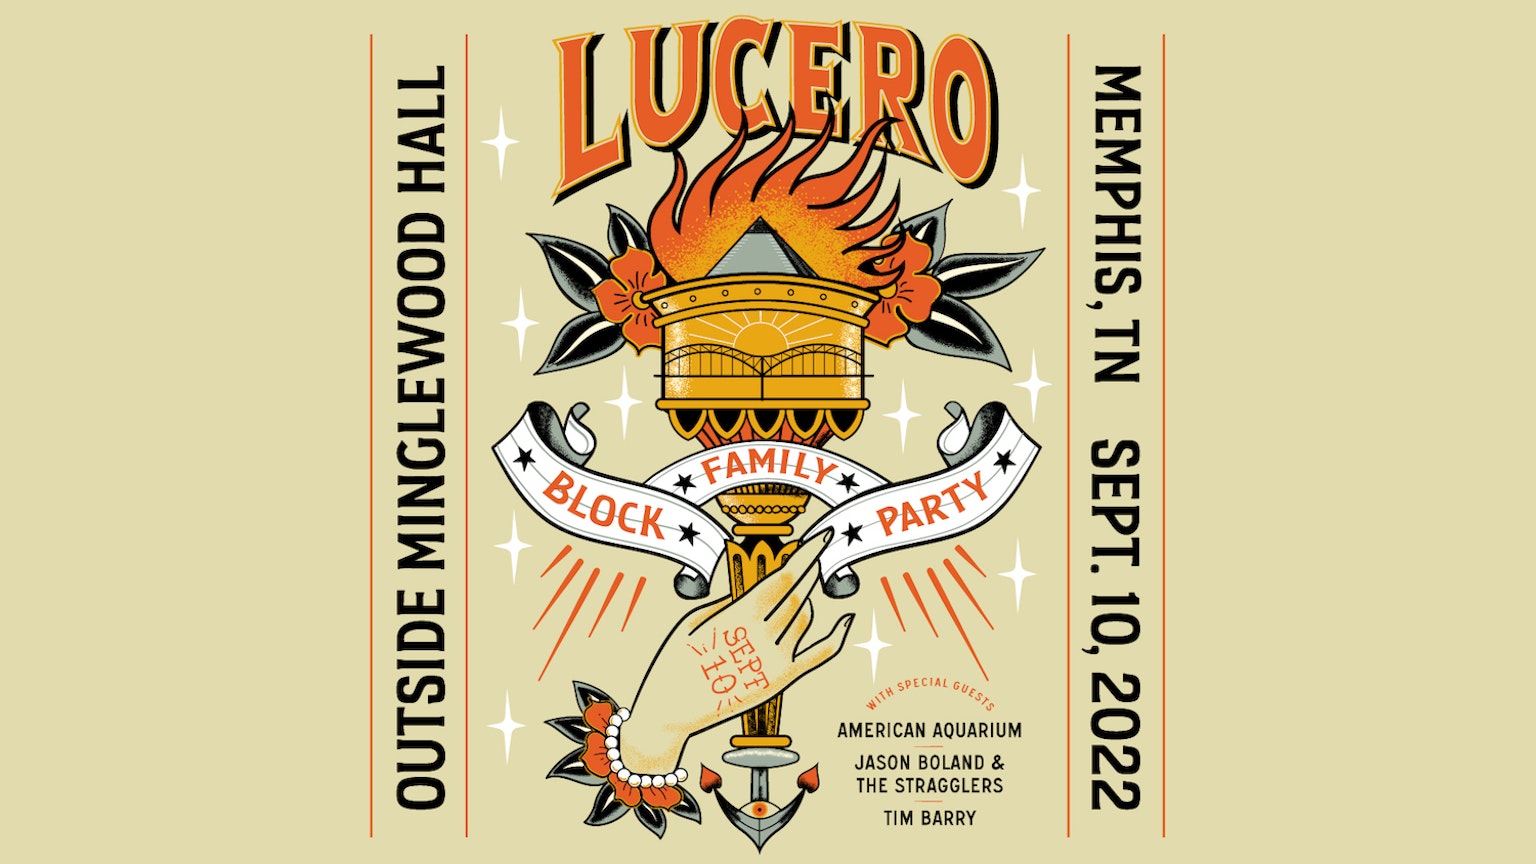 Lucero Tickets Memphis, TN Lucero Family Block Party Minglewood Hall Sat, Sep 10 2022